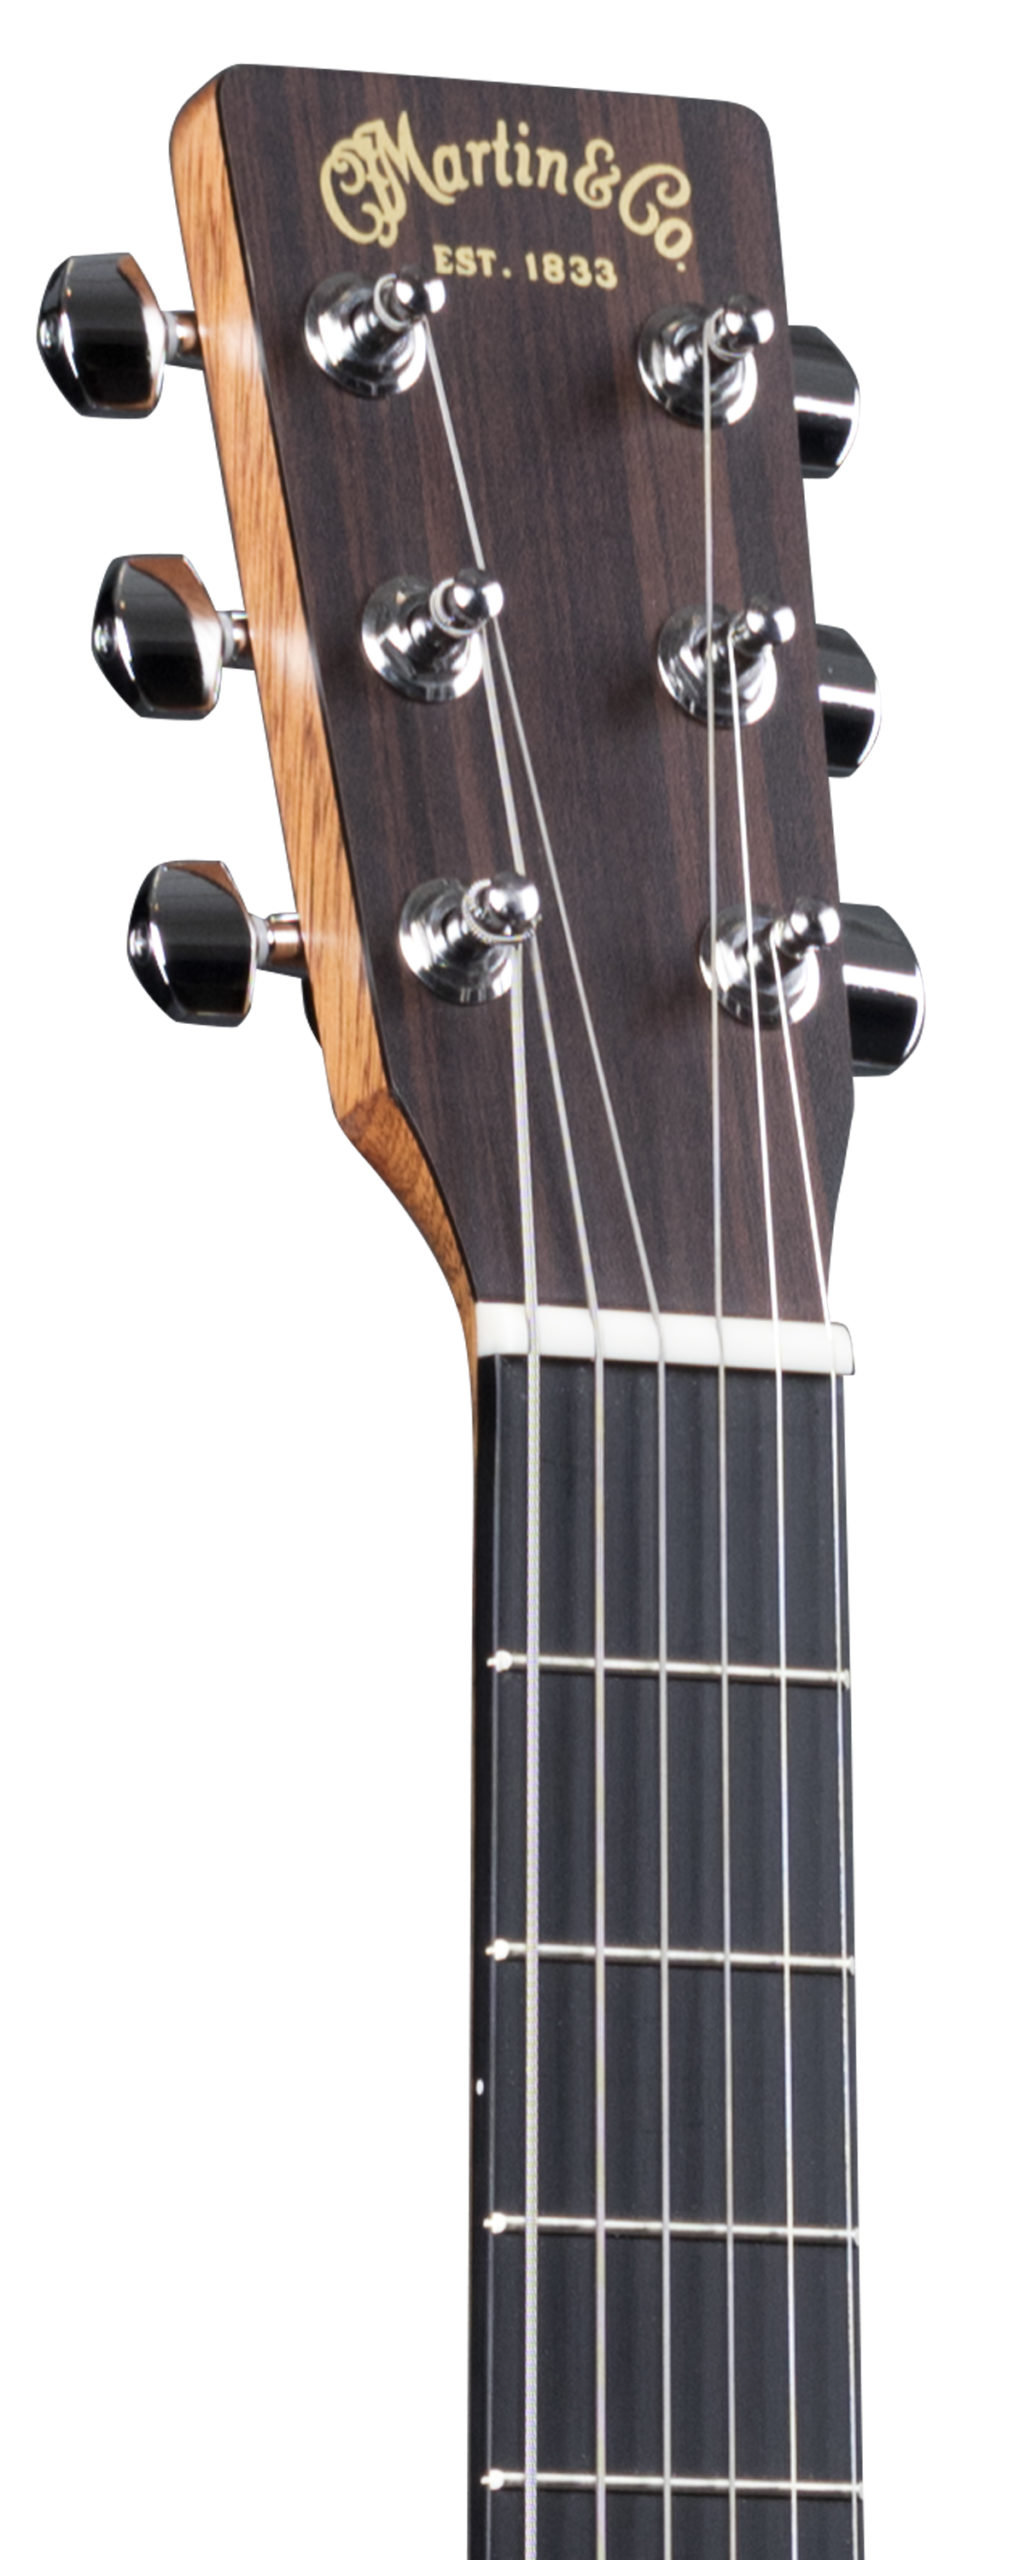 Martin DJr-10 Sitka Spruce Guitar